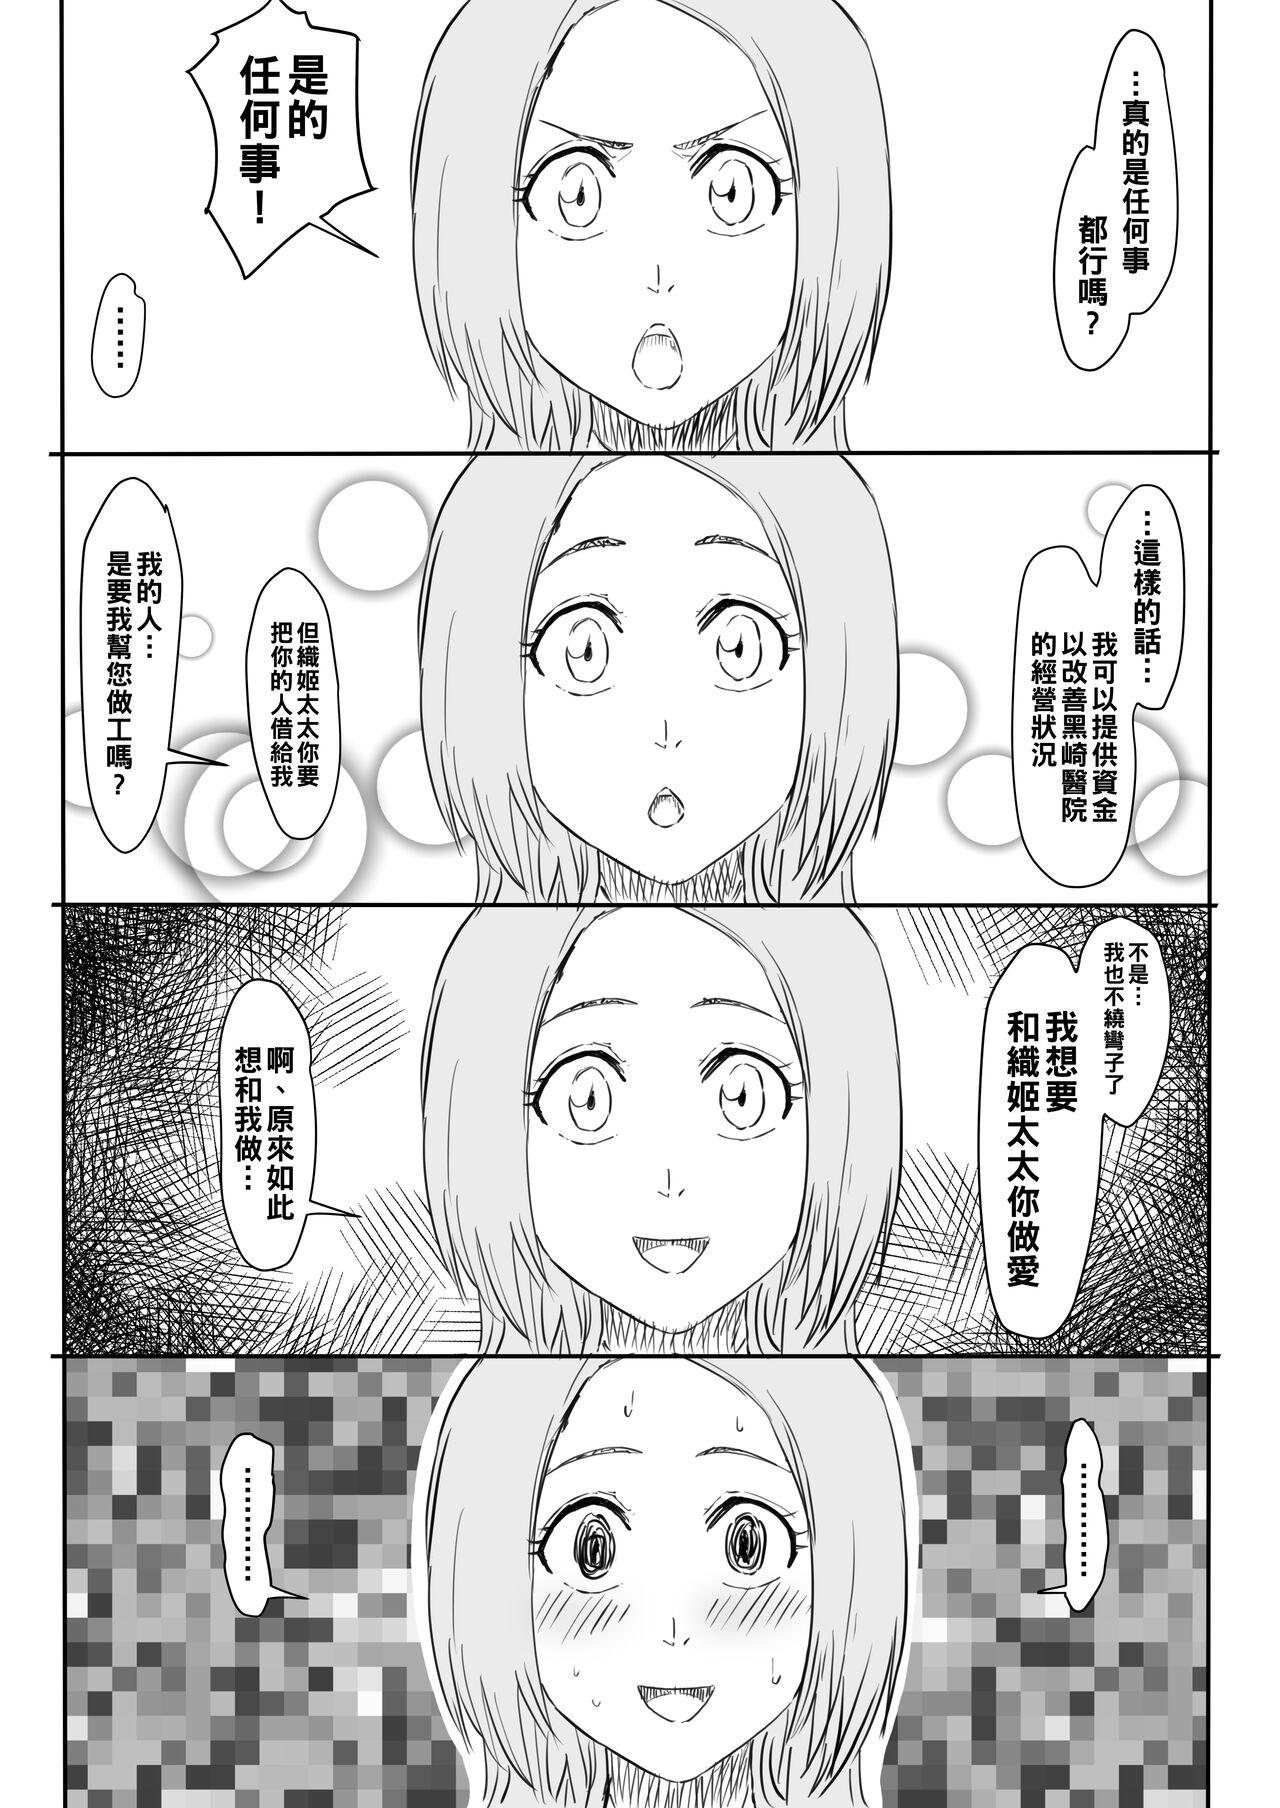 Dicks Orihime Manga - Bleach Anal Licking - Picture 3